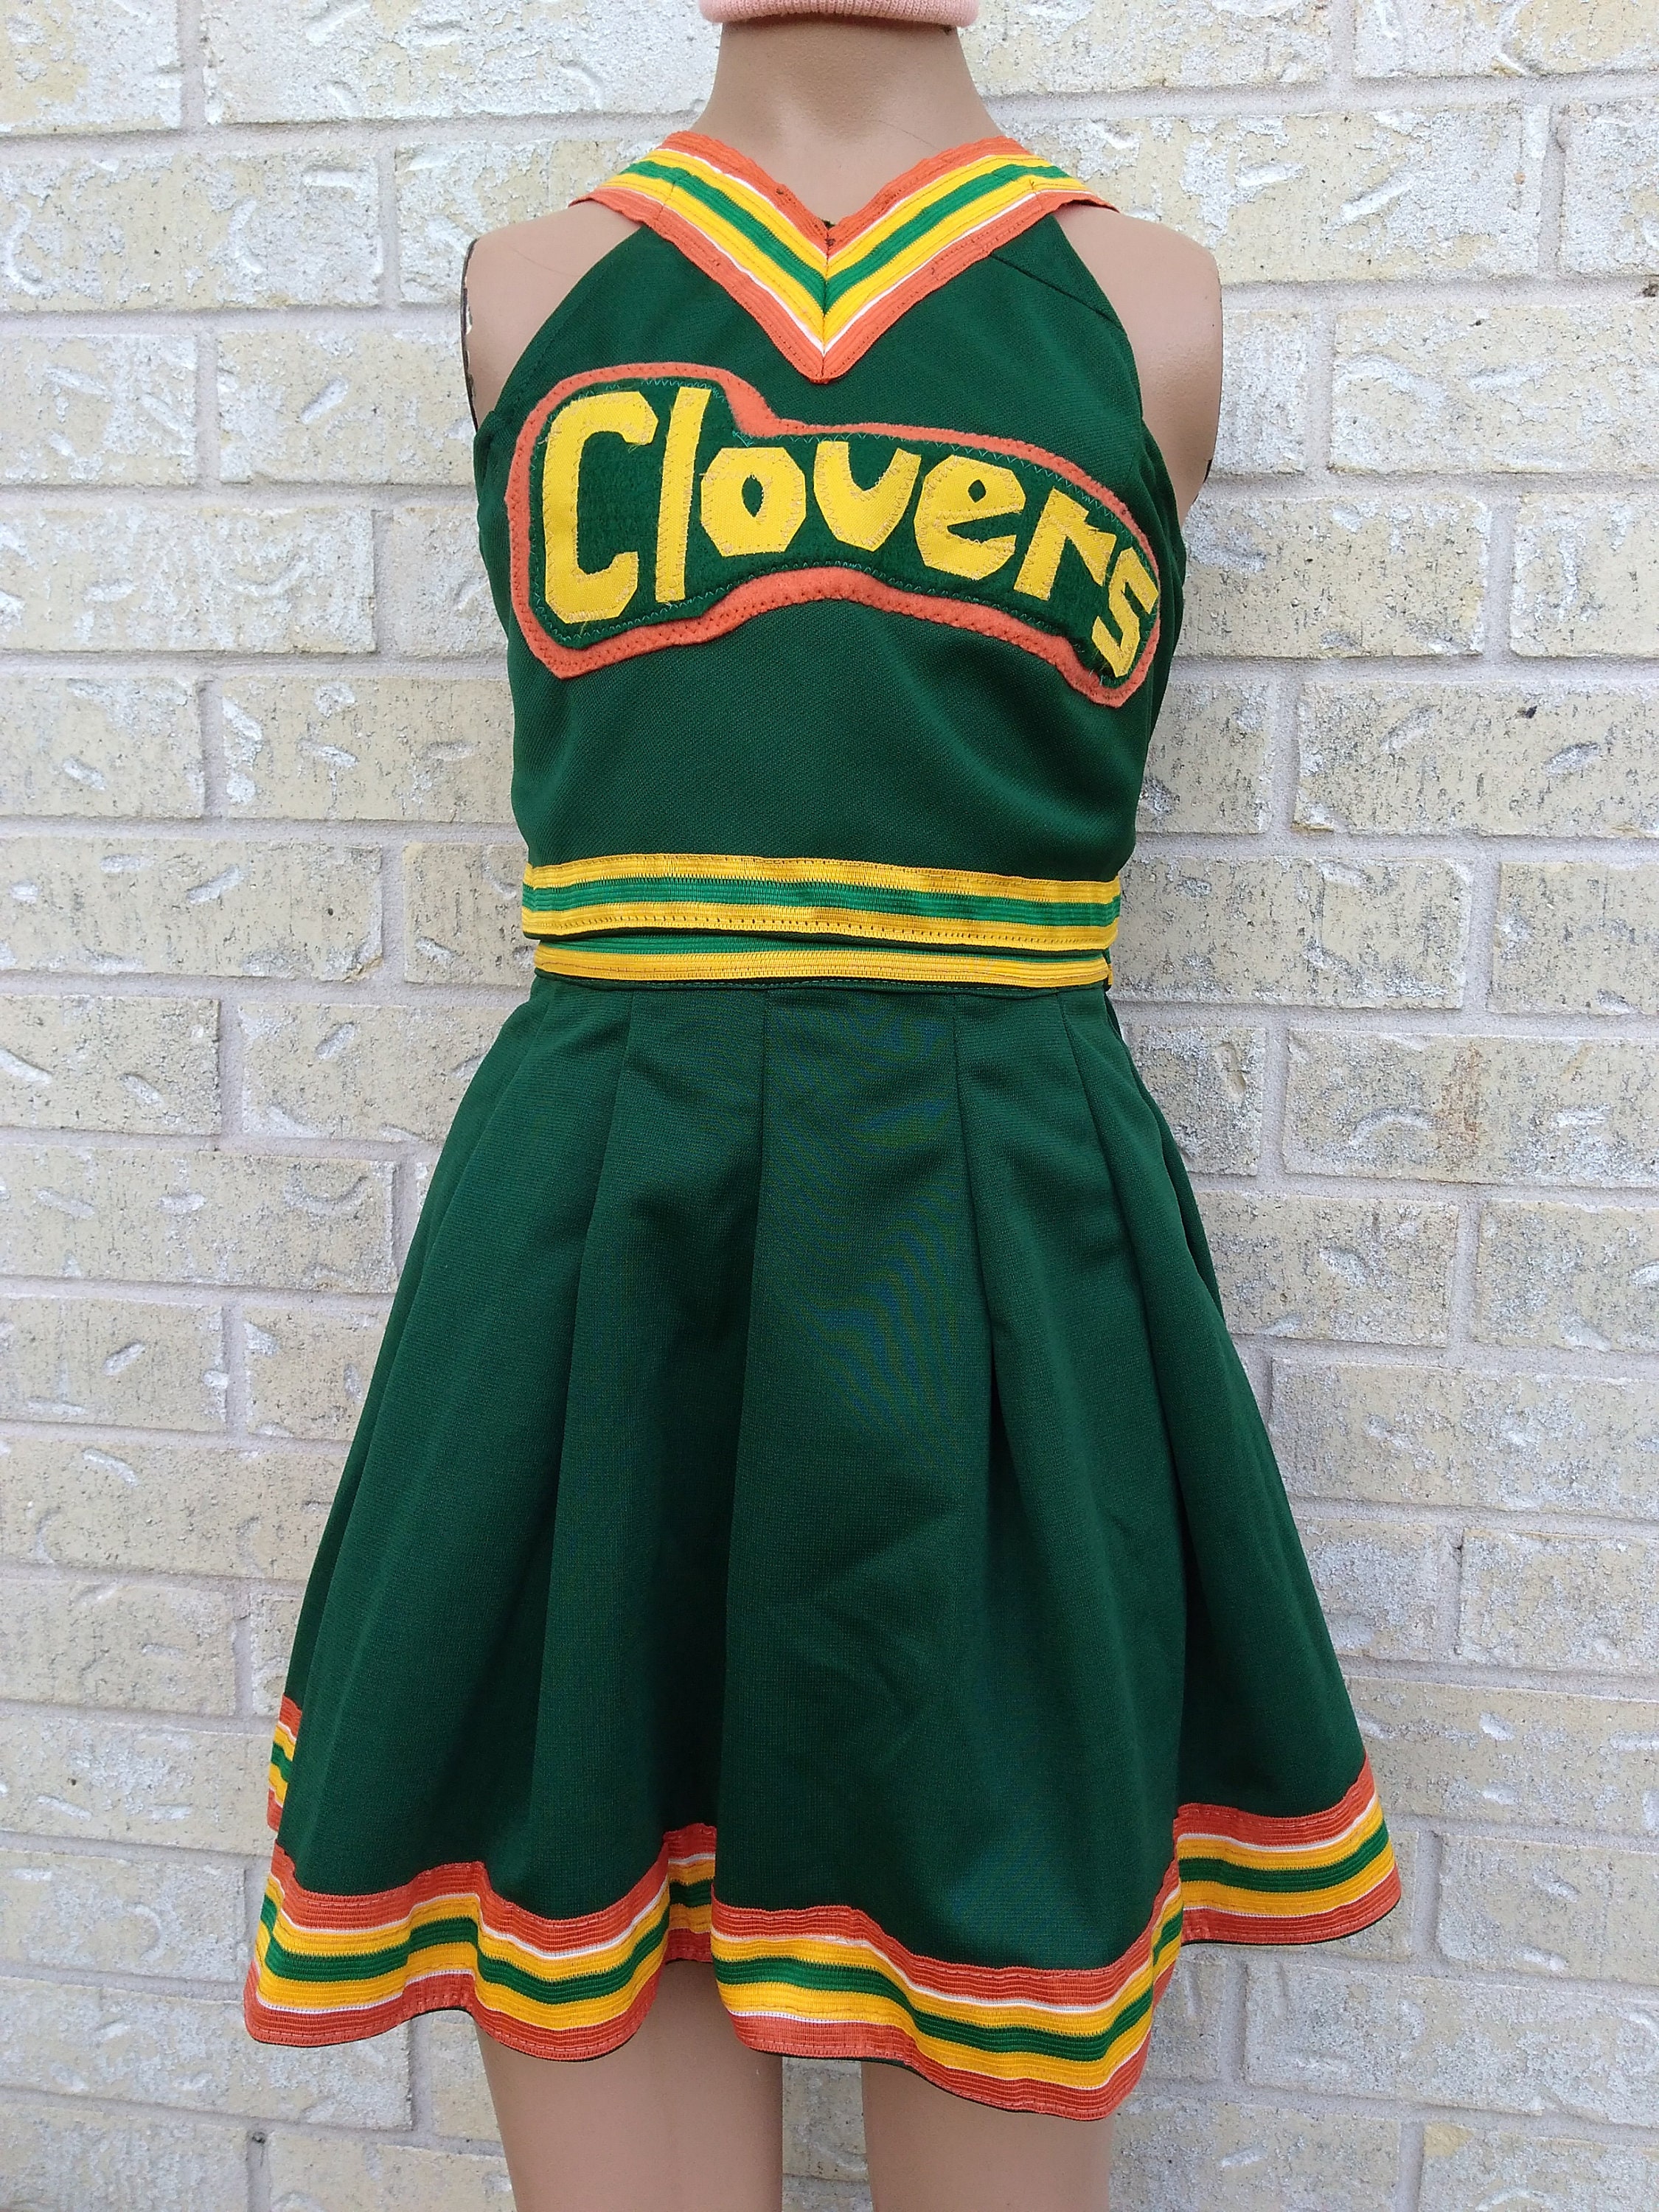 bring it on clover green cheerleader uniform halloween